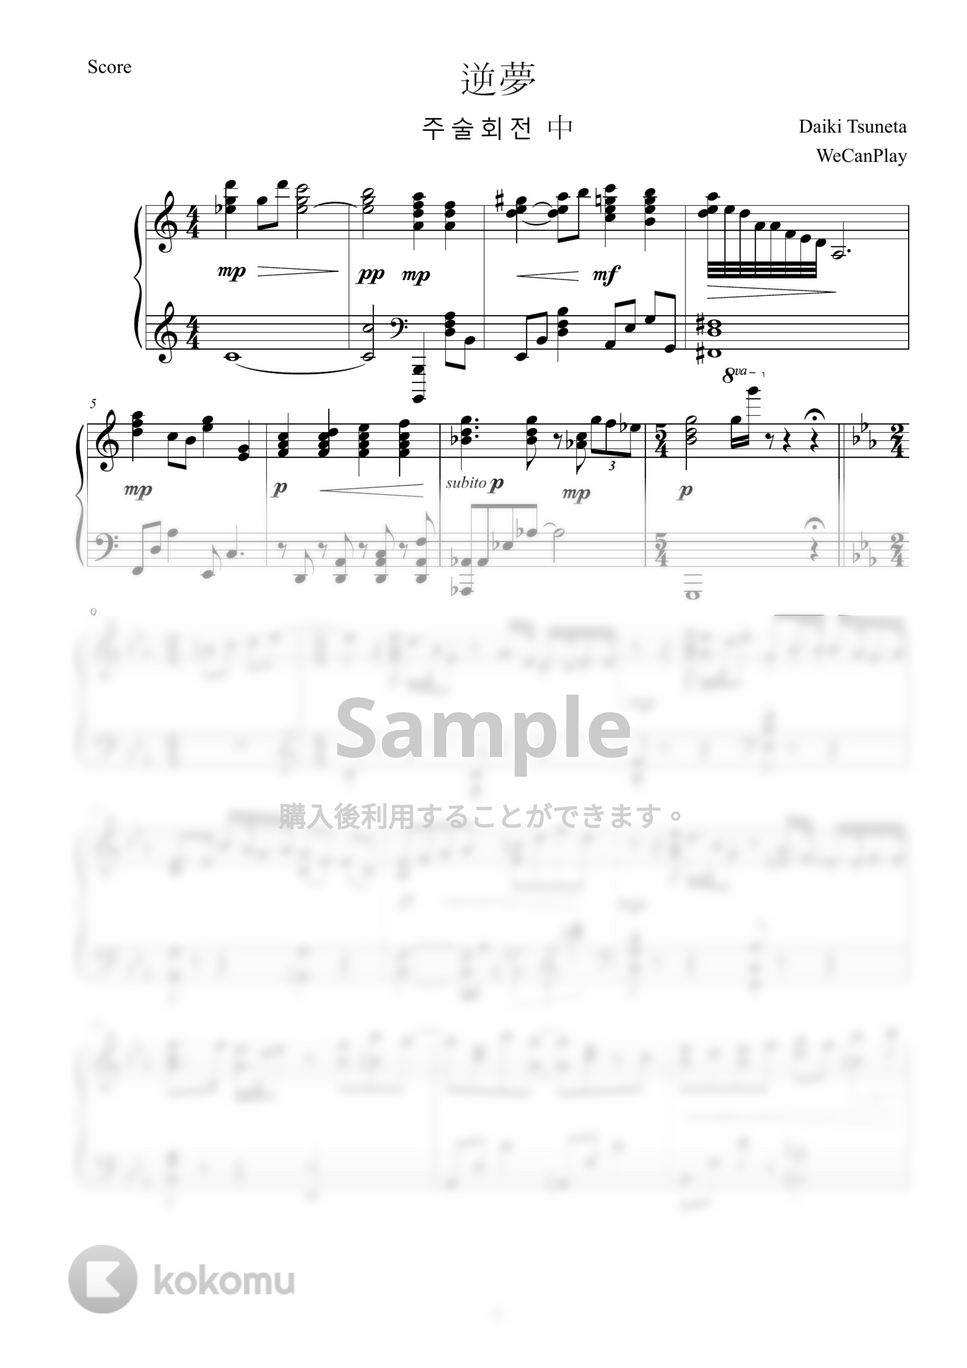 King Gnu - 逆夢(呪術廻戦OST) (piano solo/逆夢/呪術廻戦OST) by WeCanPlay